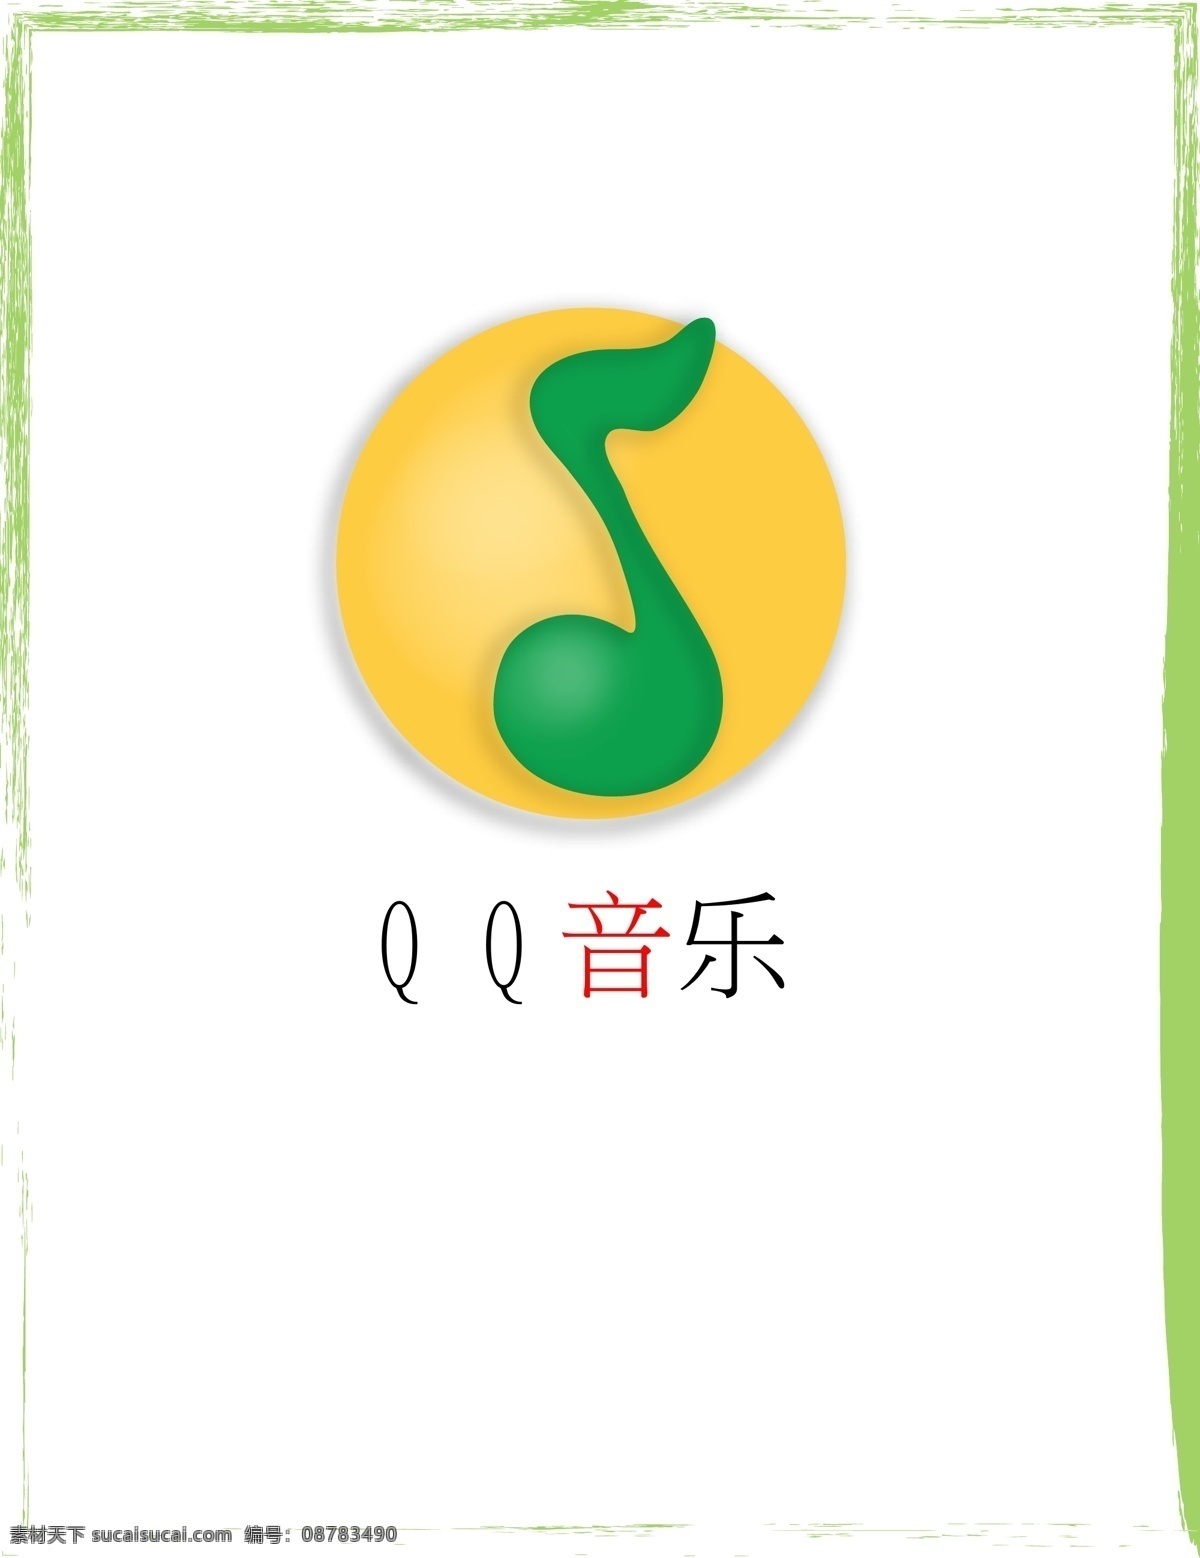 qq 音乐 logo qq音乐 绿色 特别logo 临摹 标志图标 企业 标志